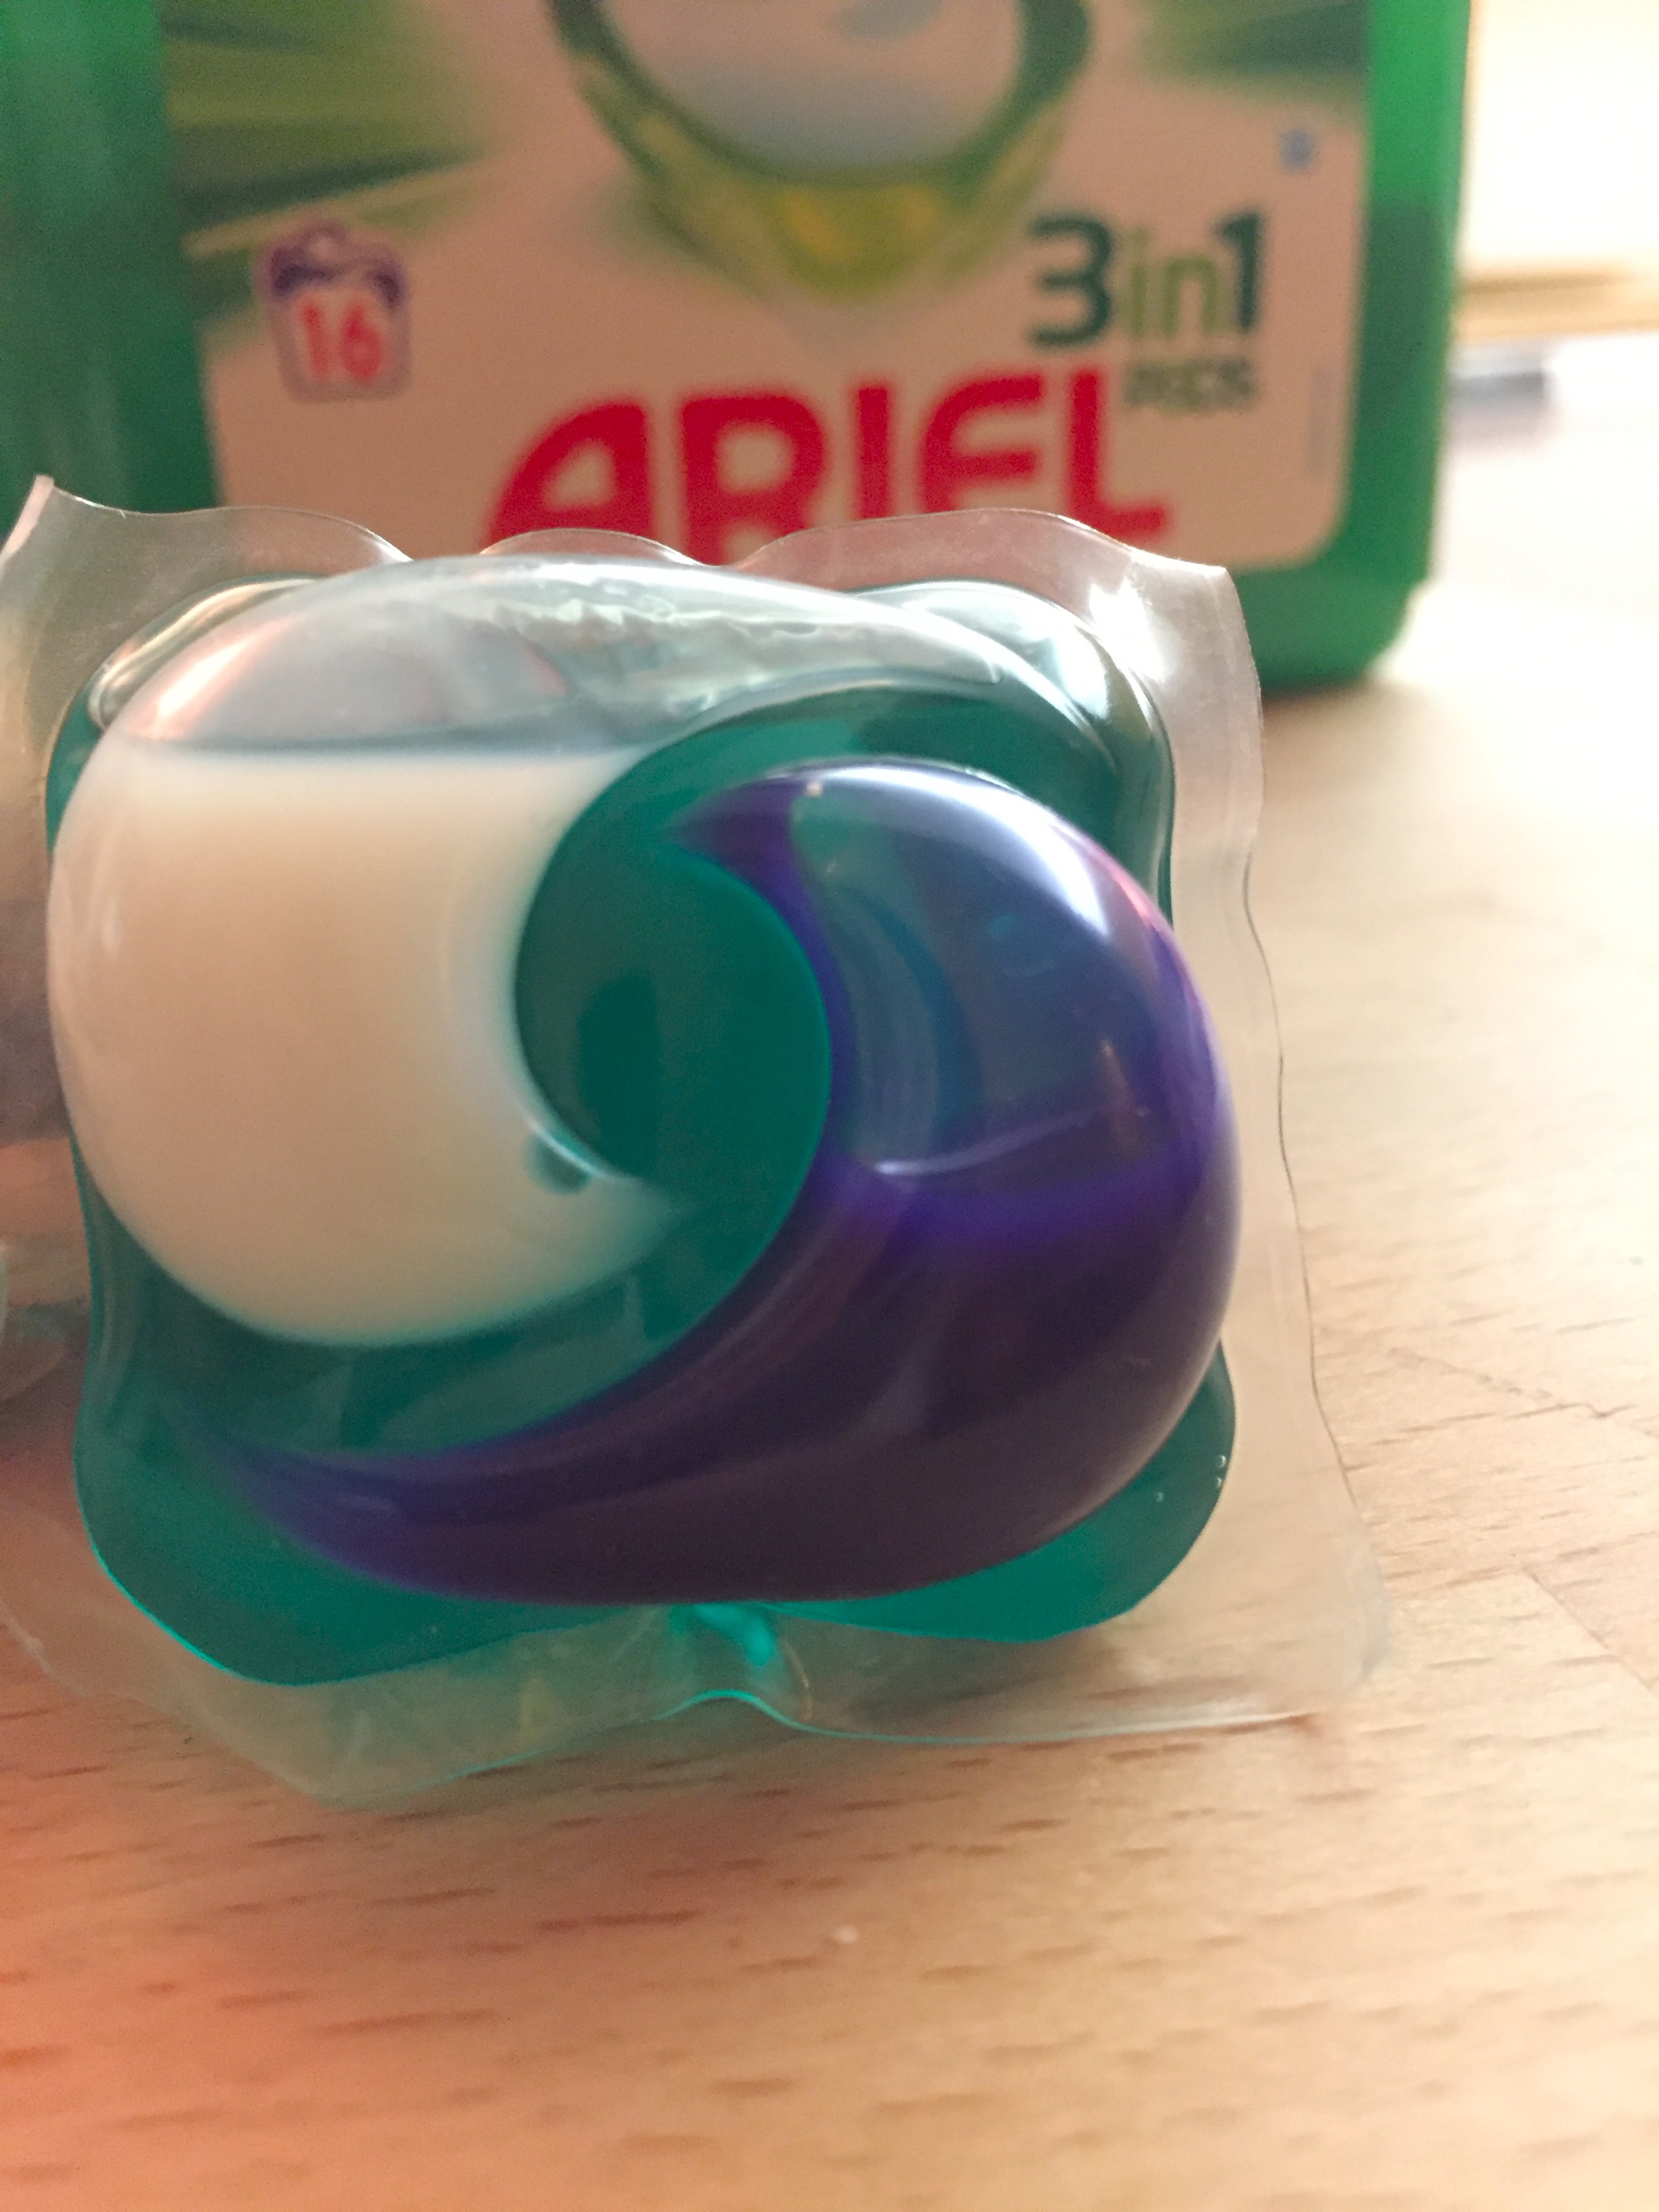 Ariel (detergente) - Wikipedia, la enciclopedia libre